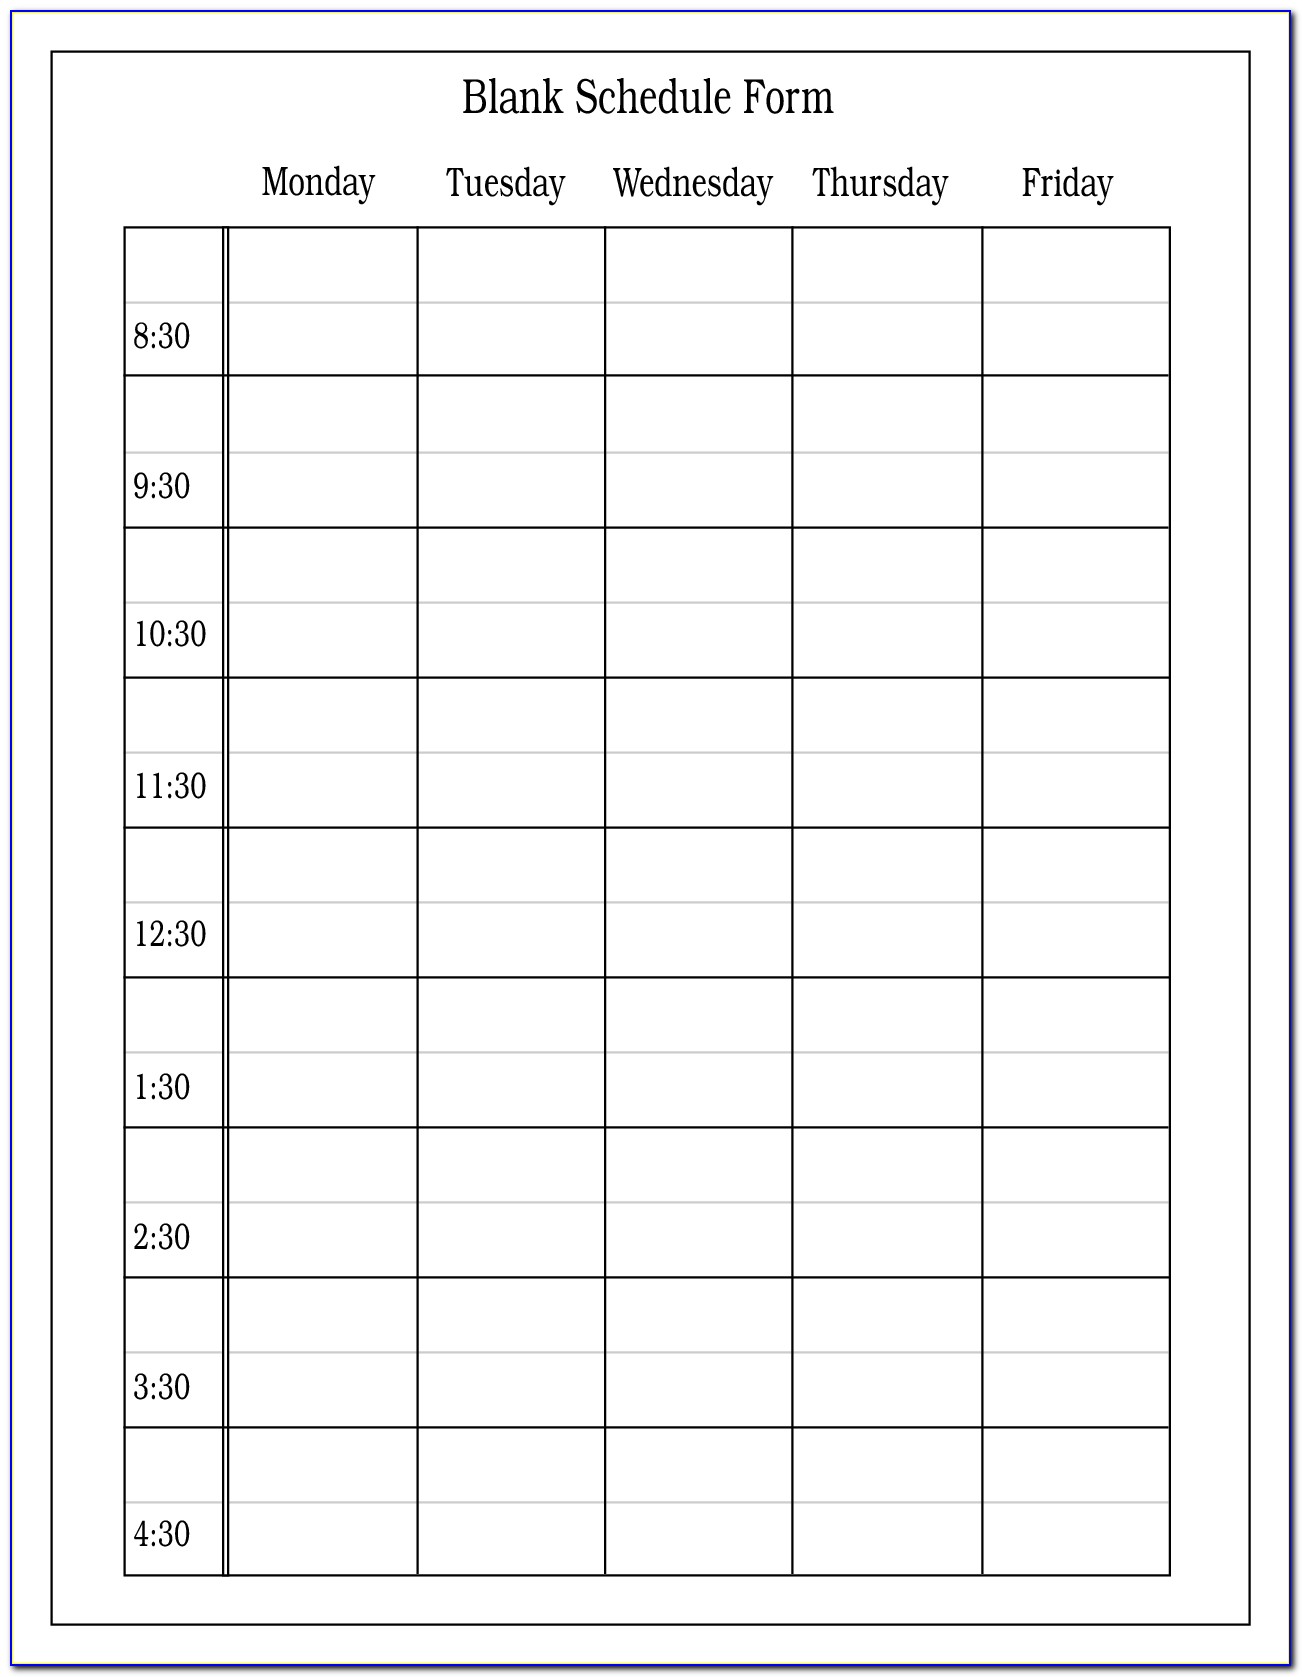 Blank Employee Schedule Form